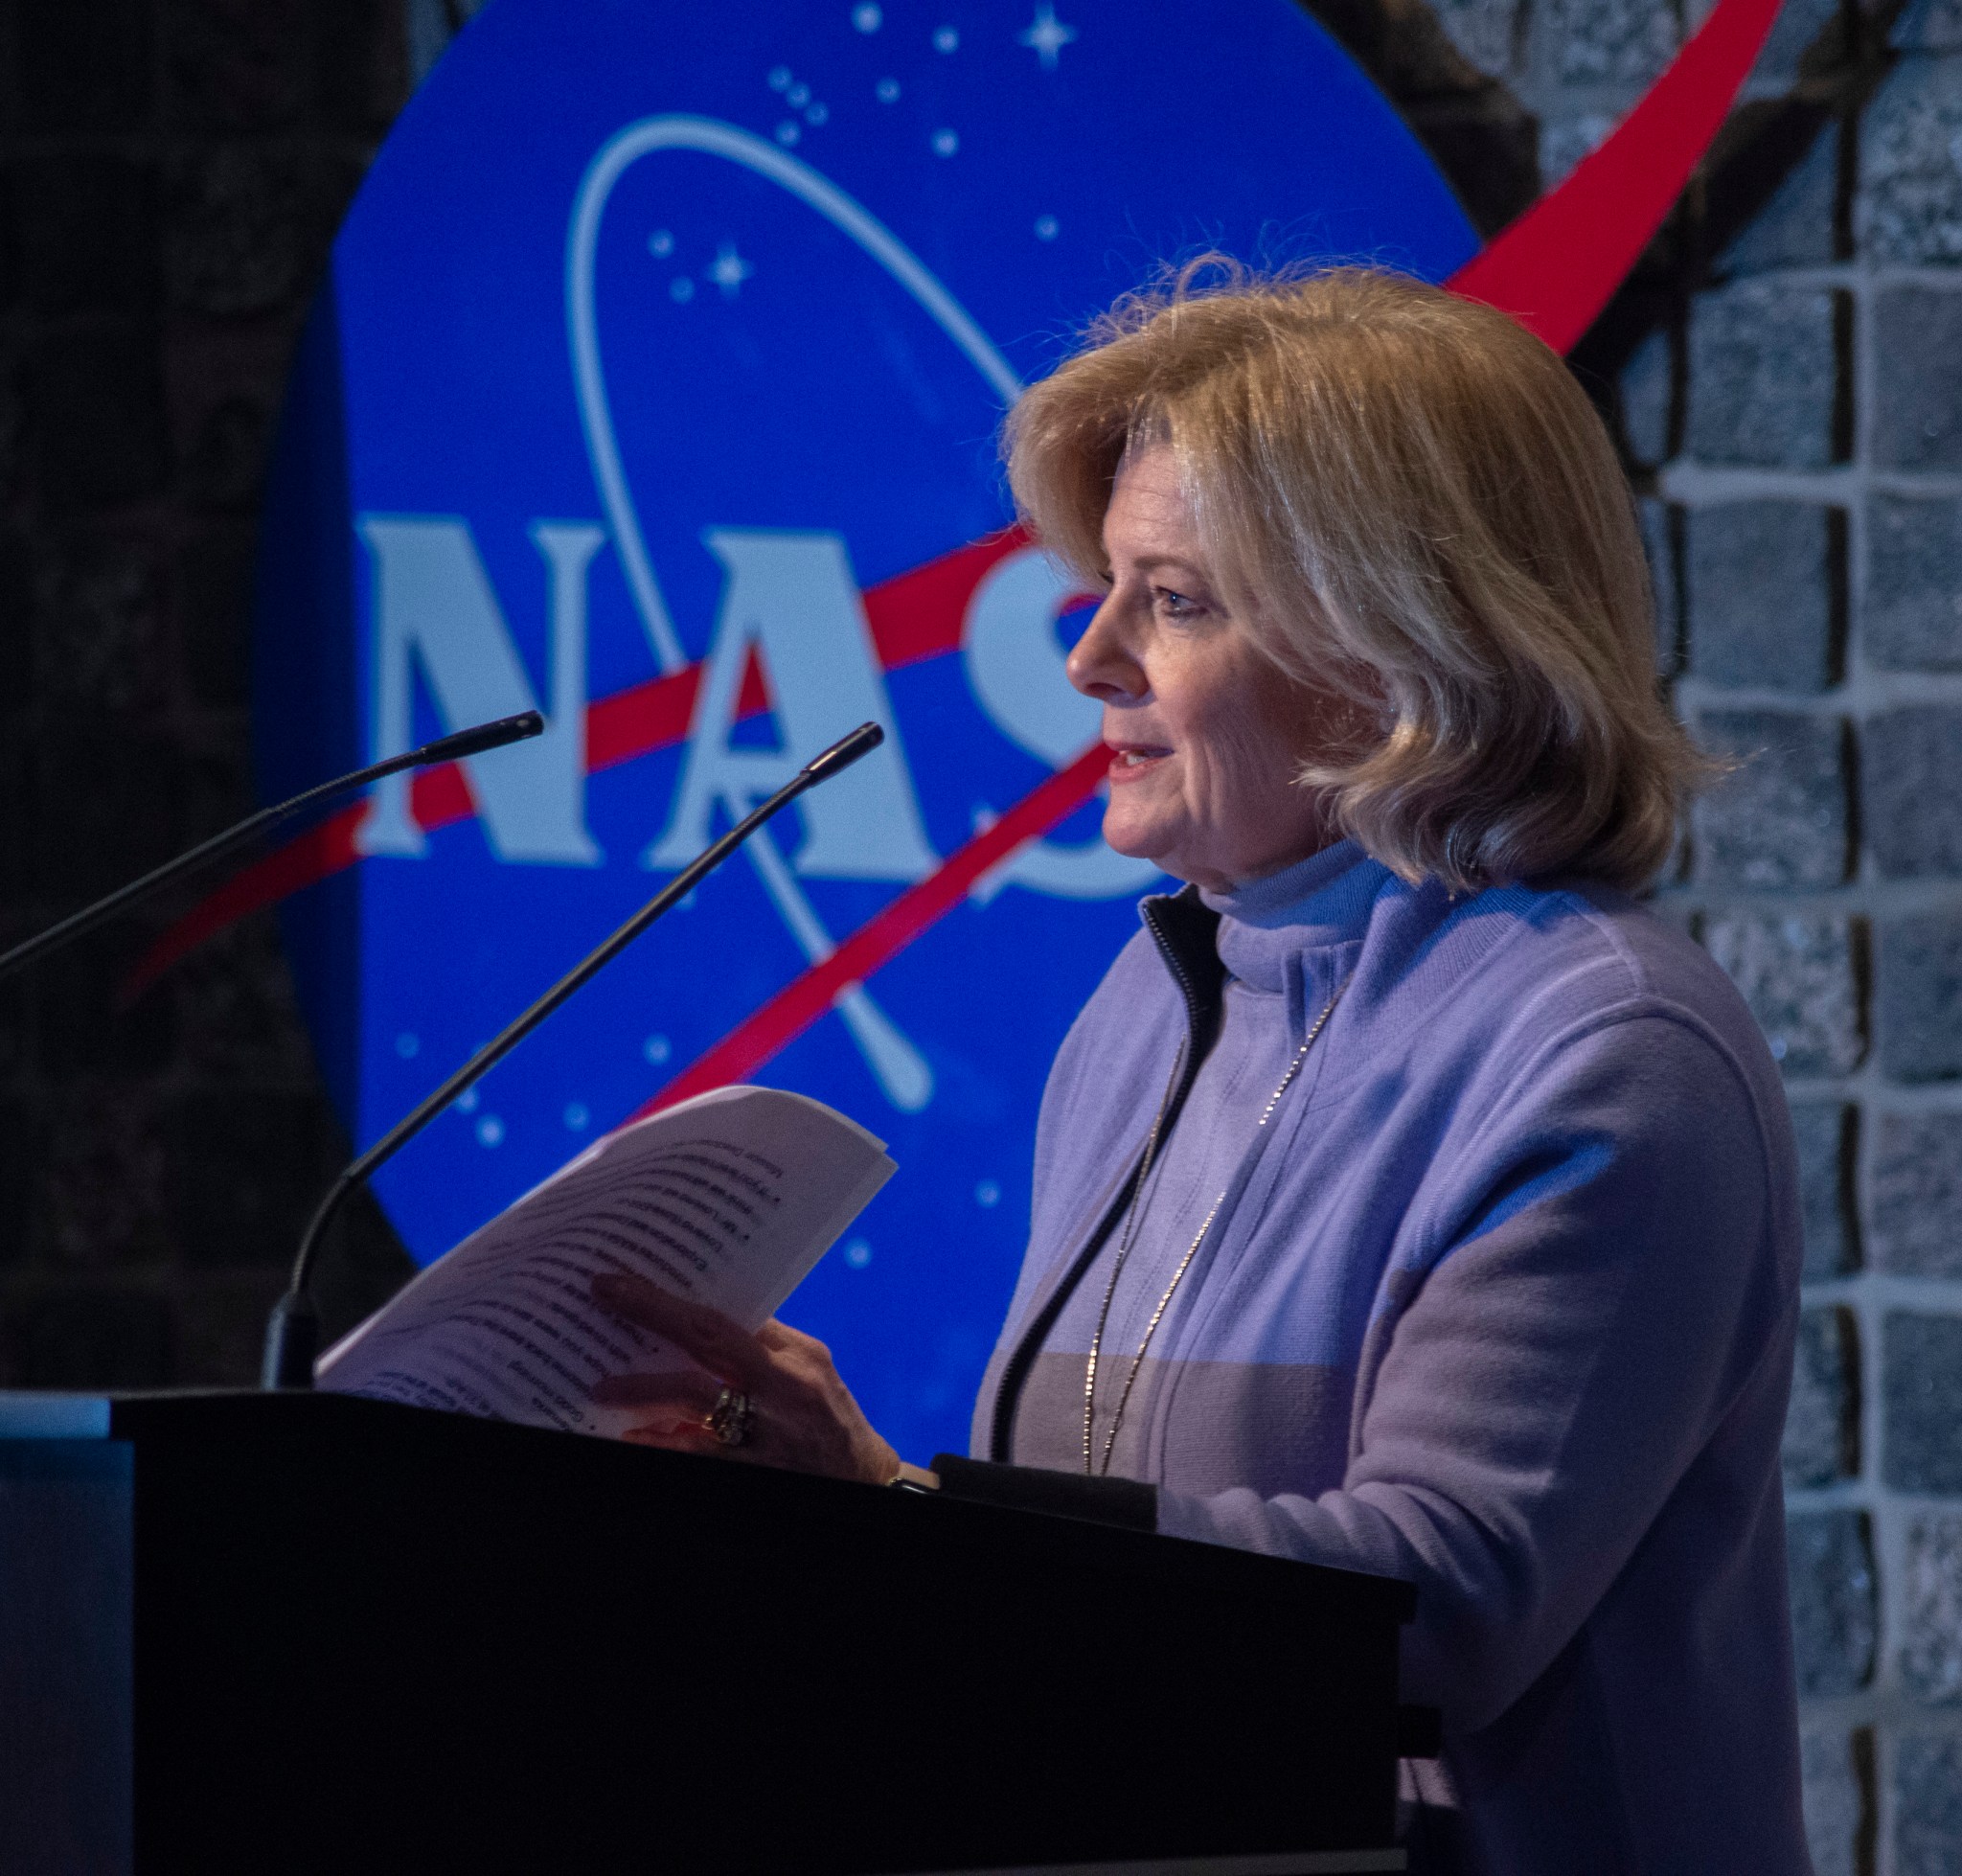 NASA’s Marshall Space Flight Center Director Jody Singer addresses team members in Morris Auditorium.